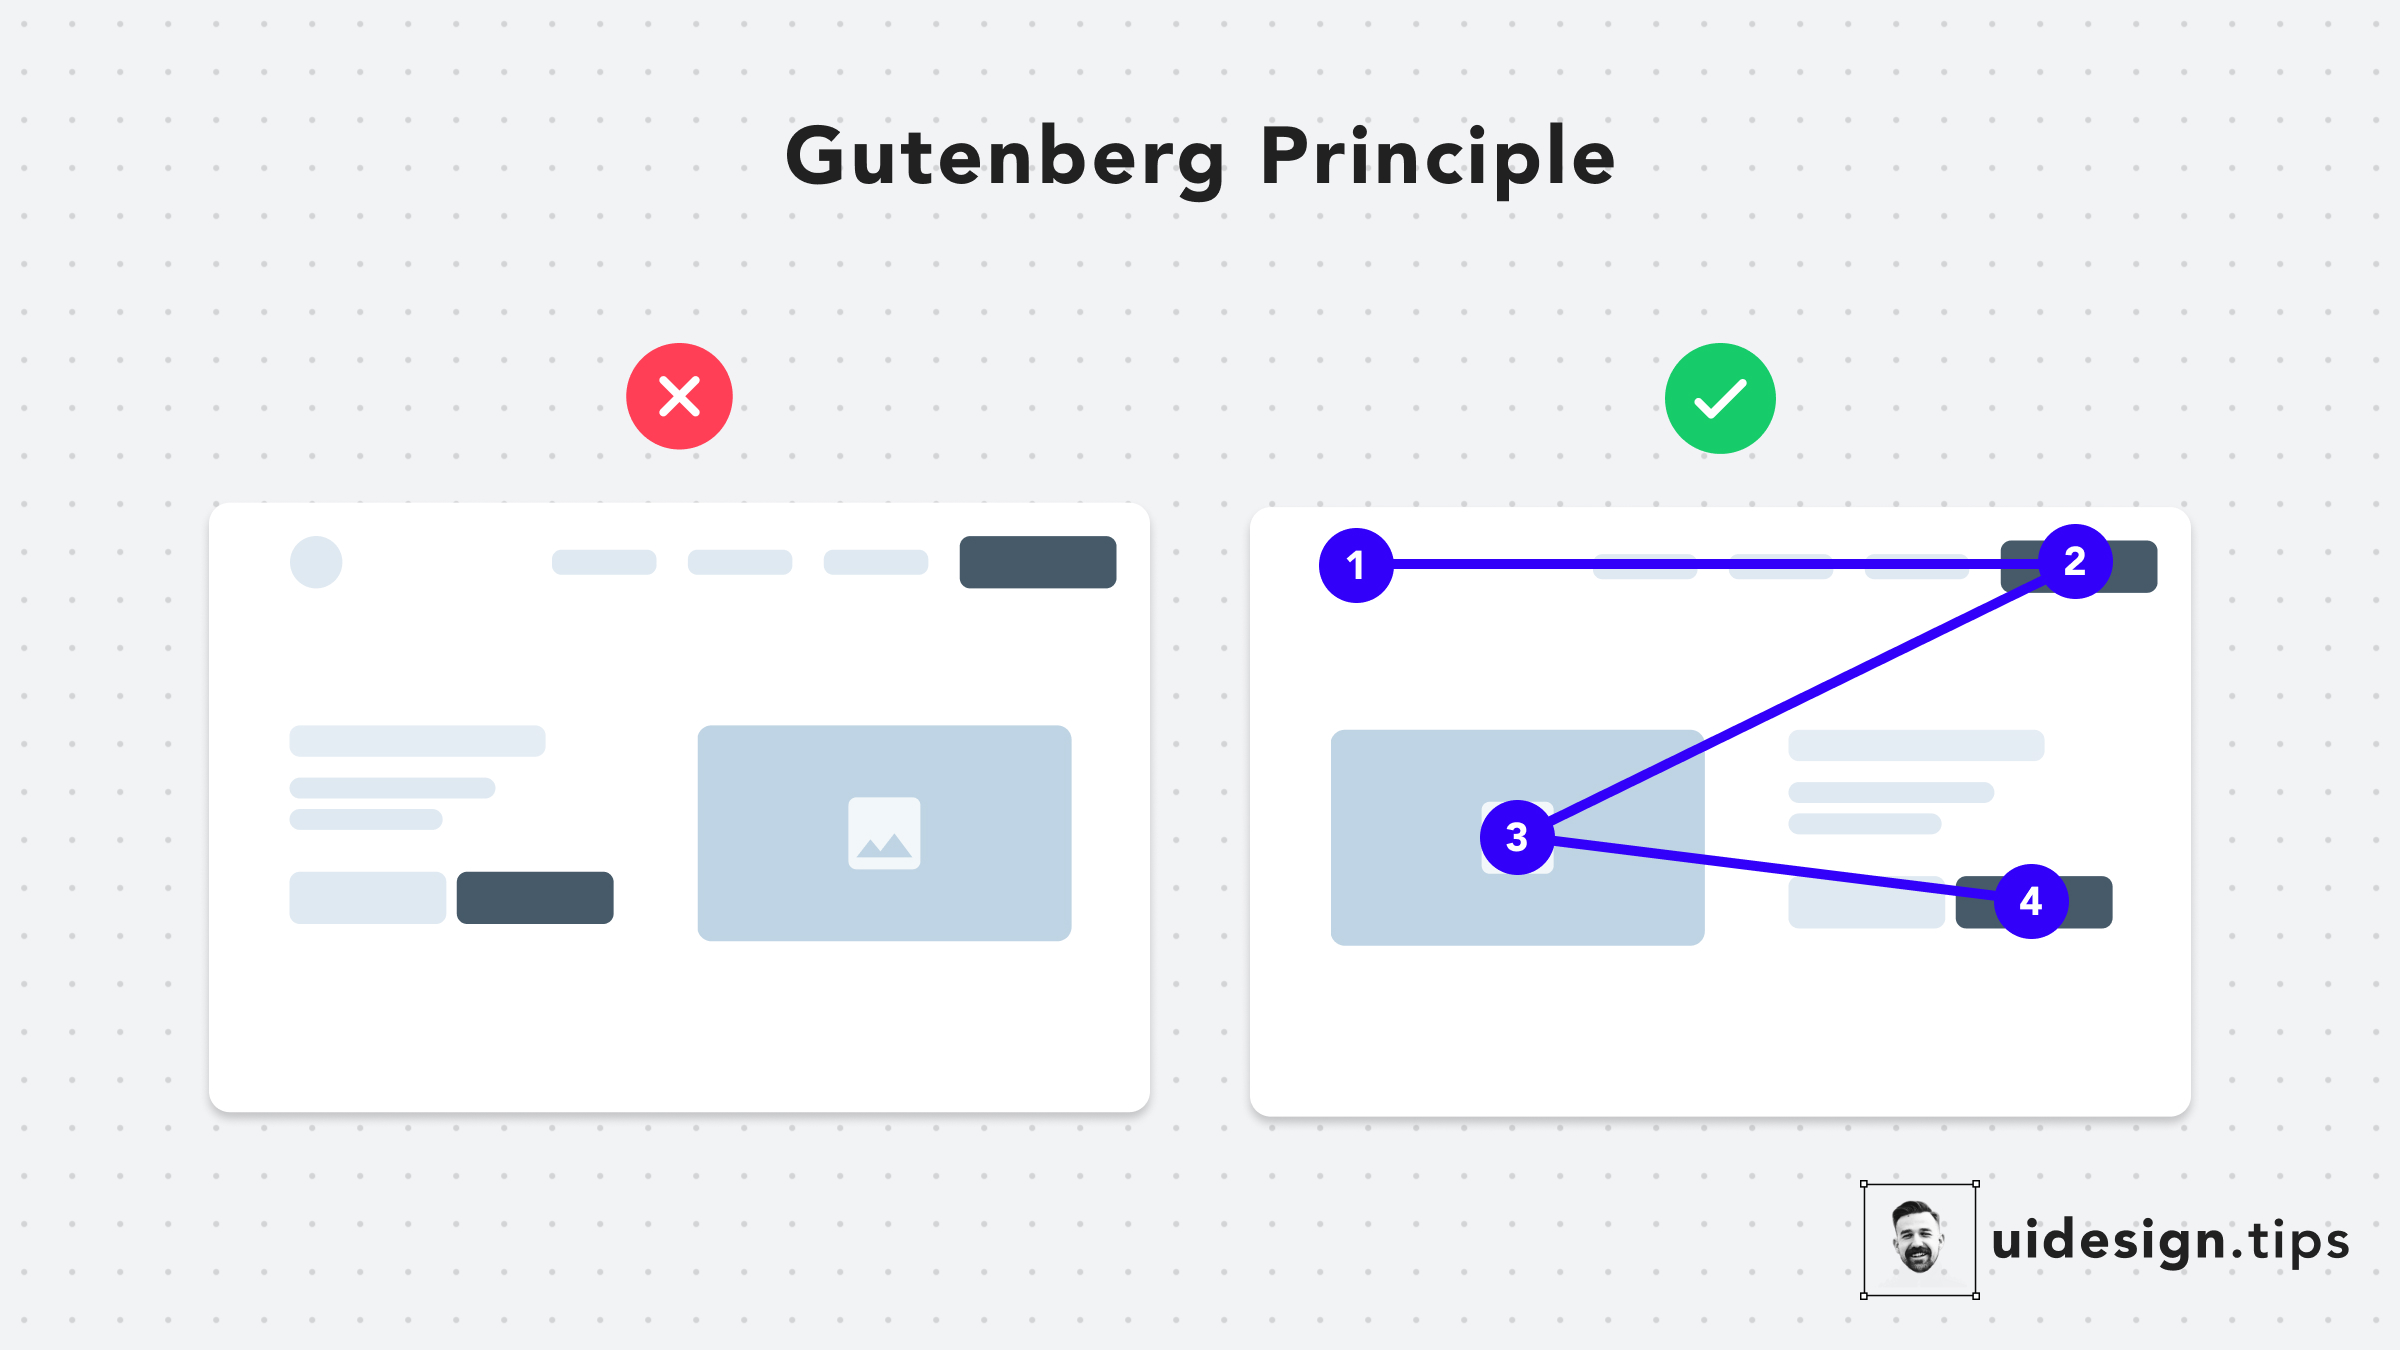 The Gutenberg Principle